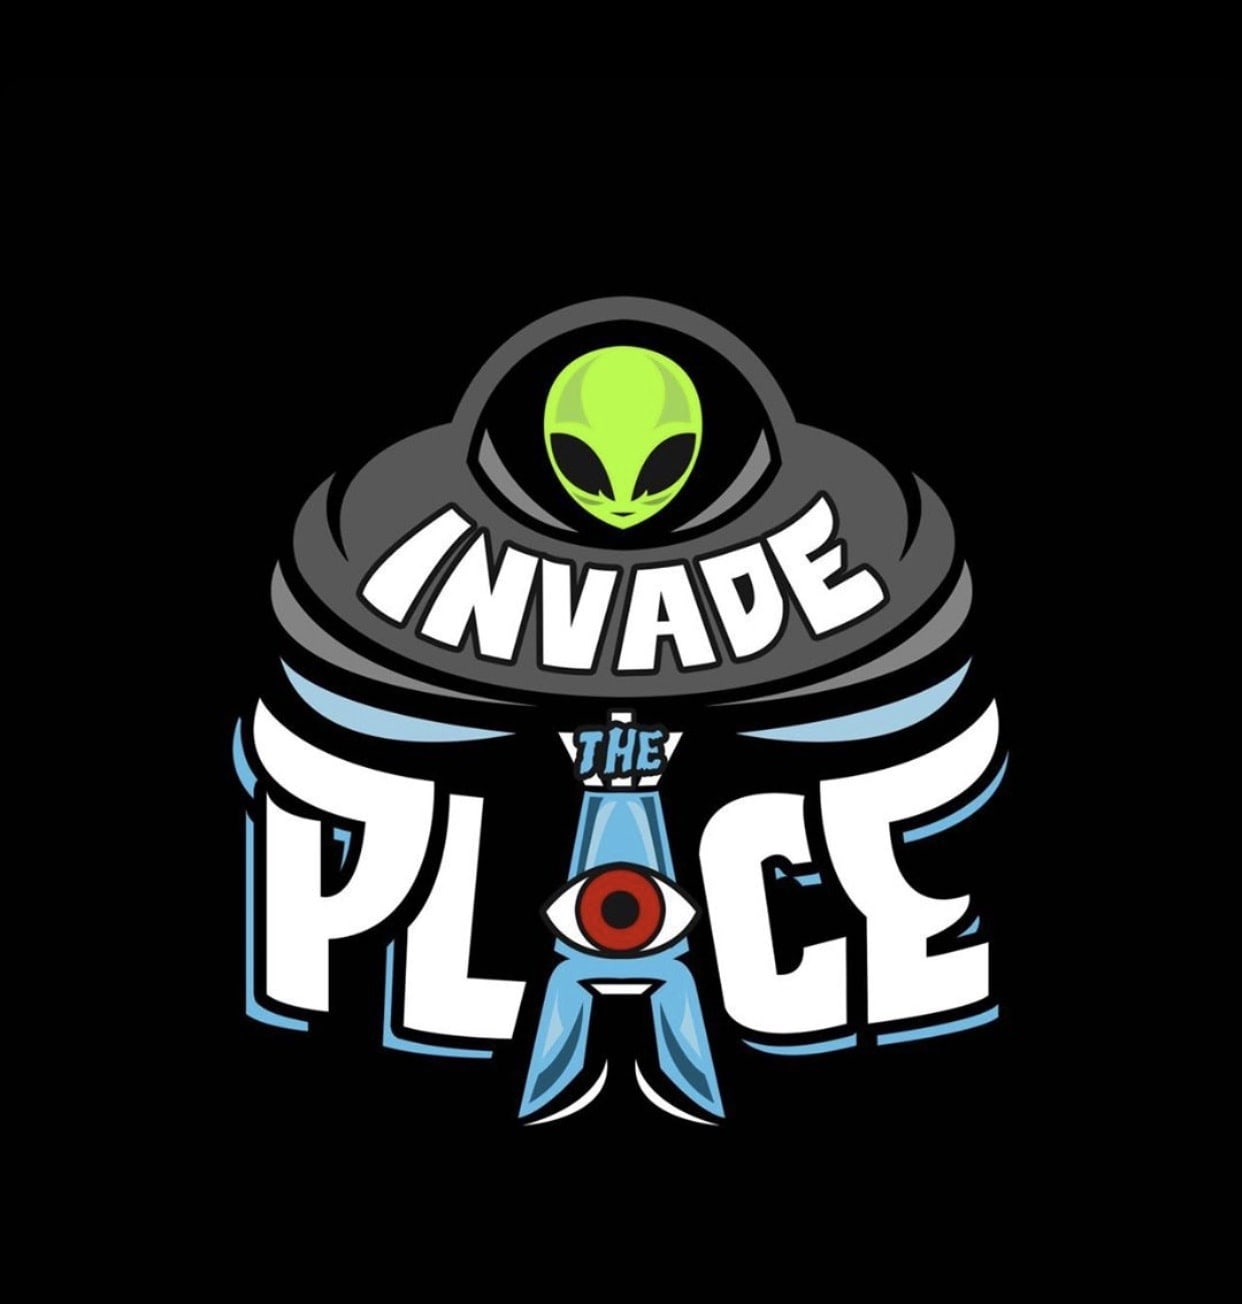 Invadetheplace